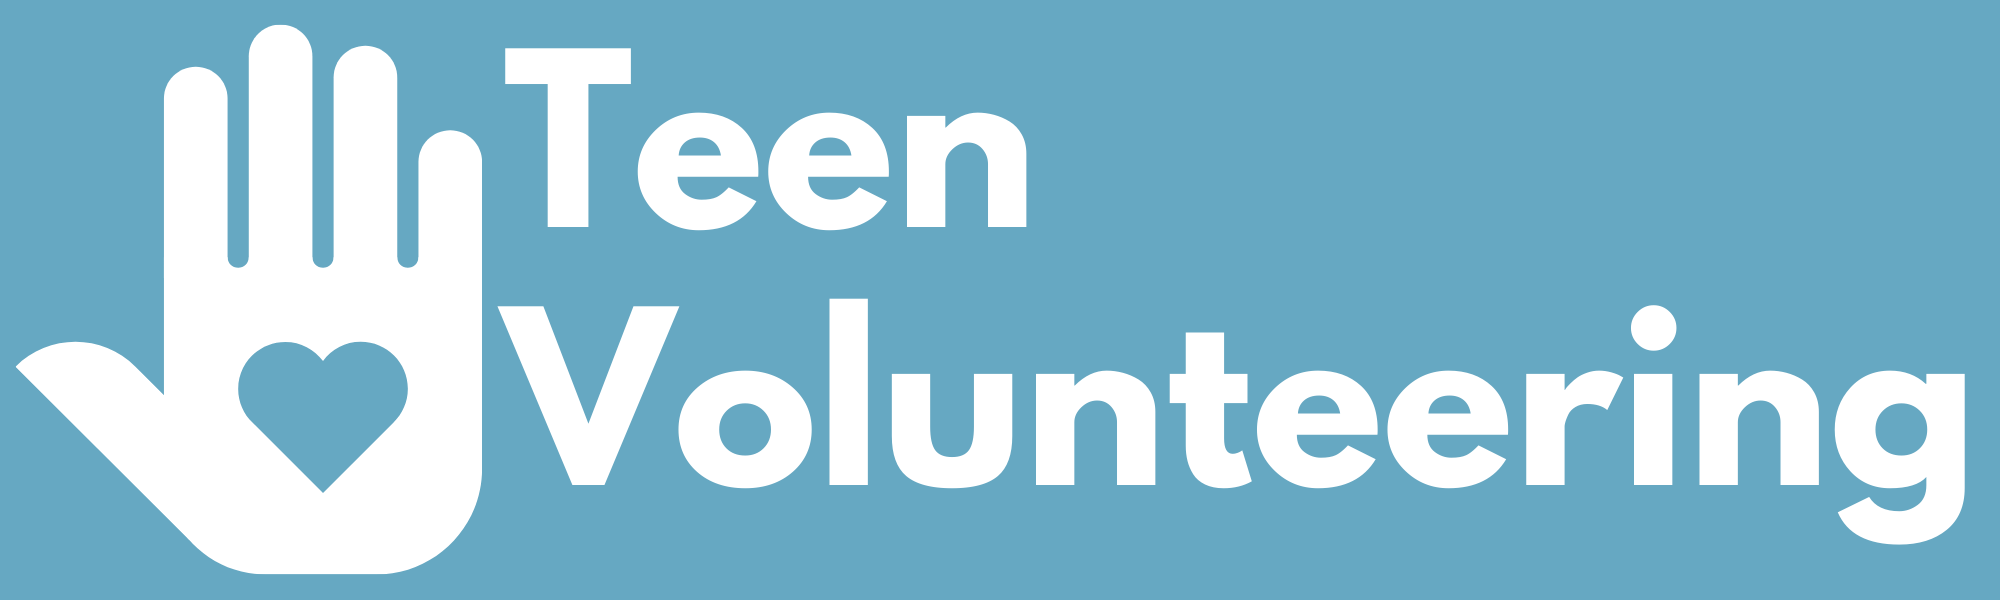 Teen Volunteer Information Page